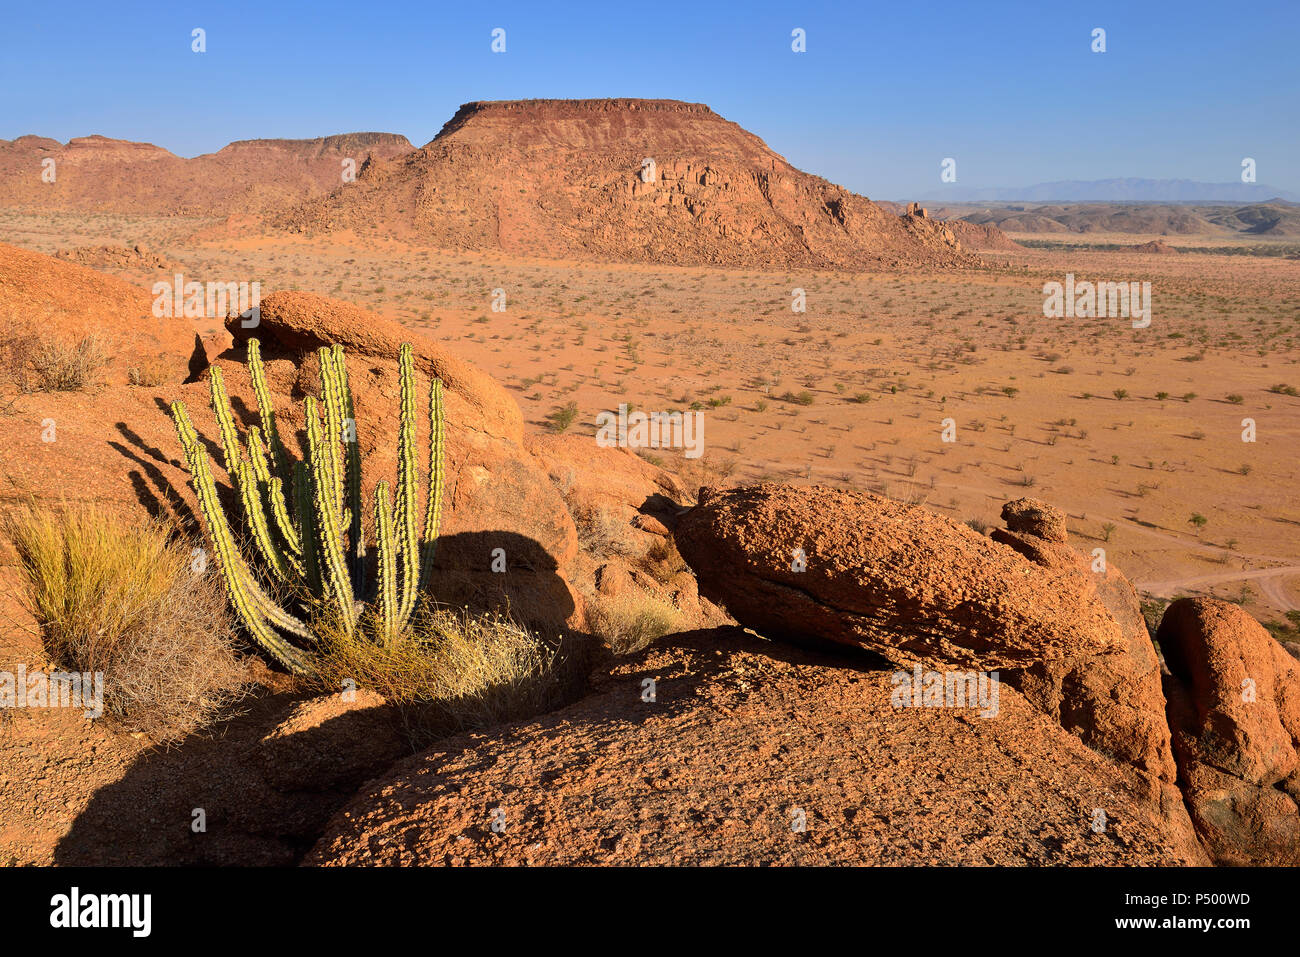 Africa, Namibia, Kunene Province, Namib Desert, Damaraland, Twyvelfontein, Aba Huab valley, granite landscape Stock Photo